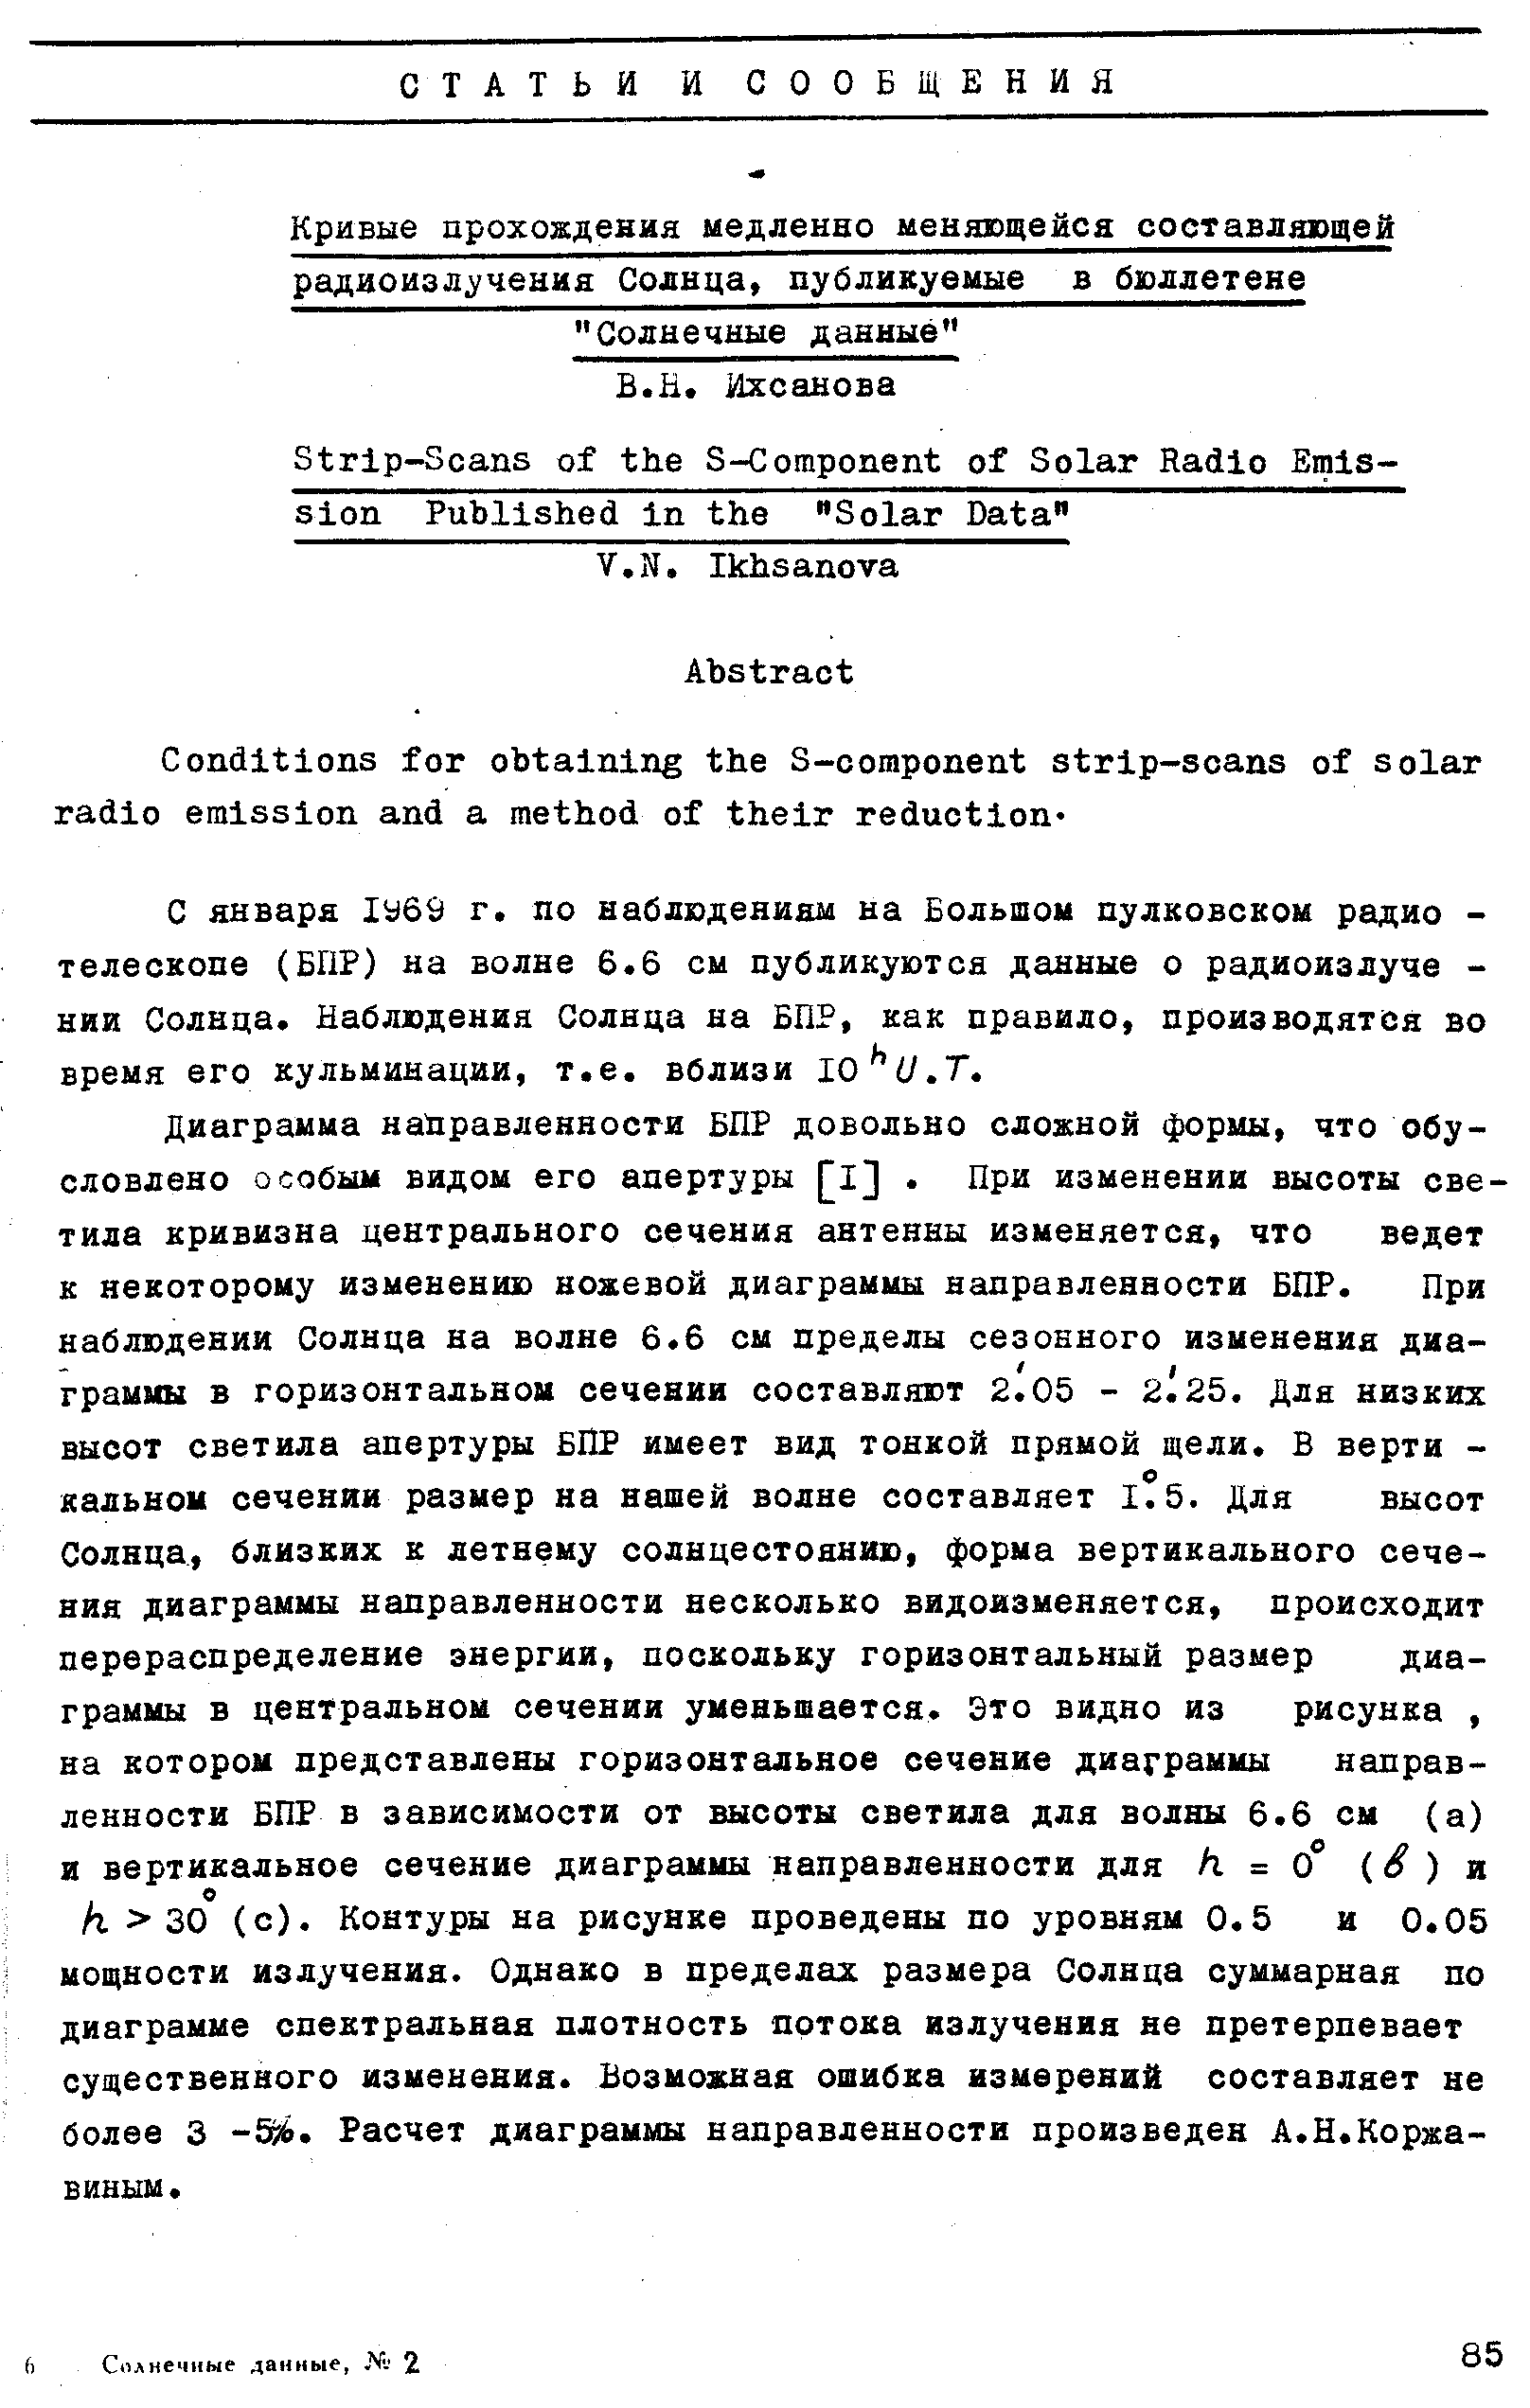 Ихсанова В.Н.,стр.1